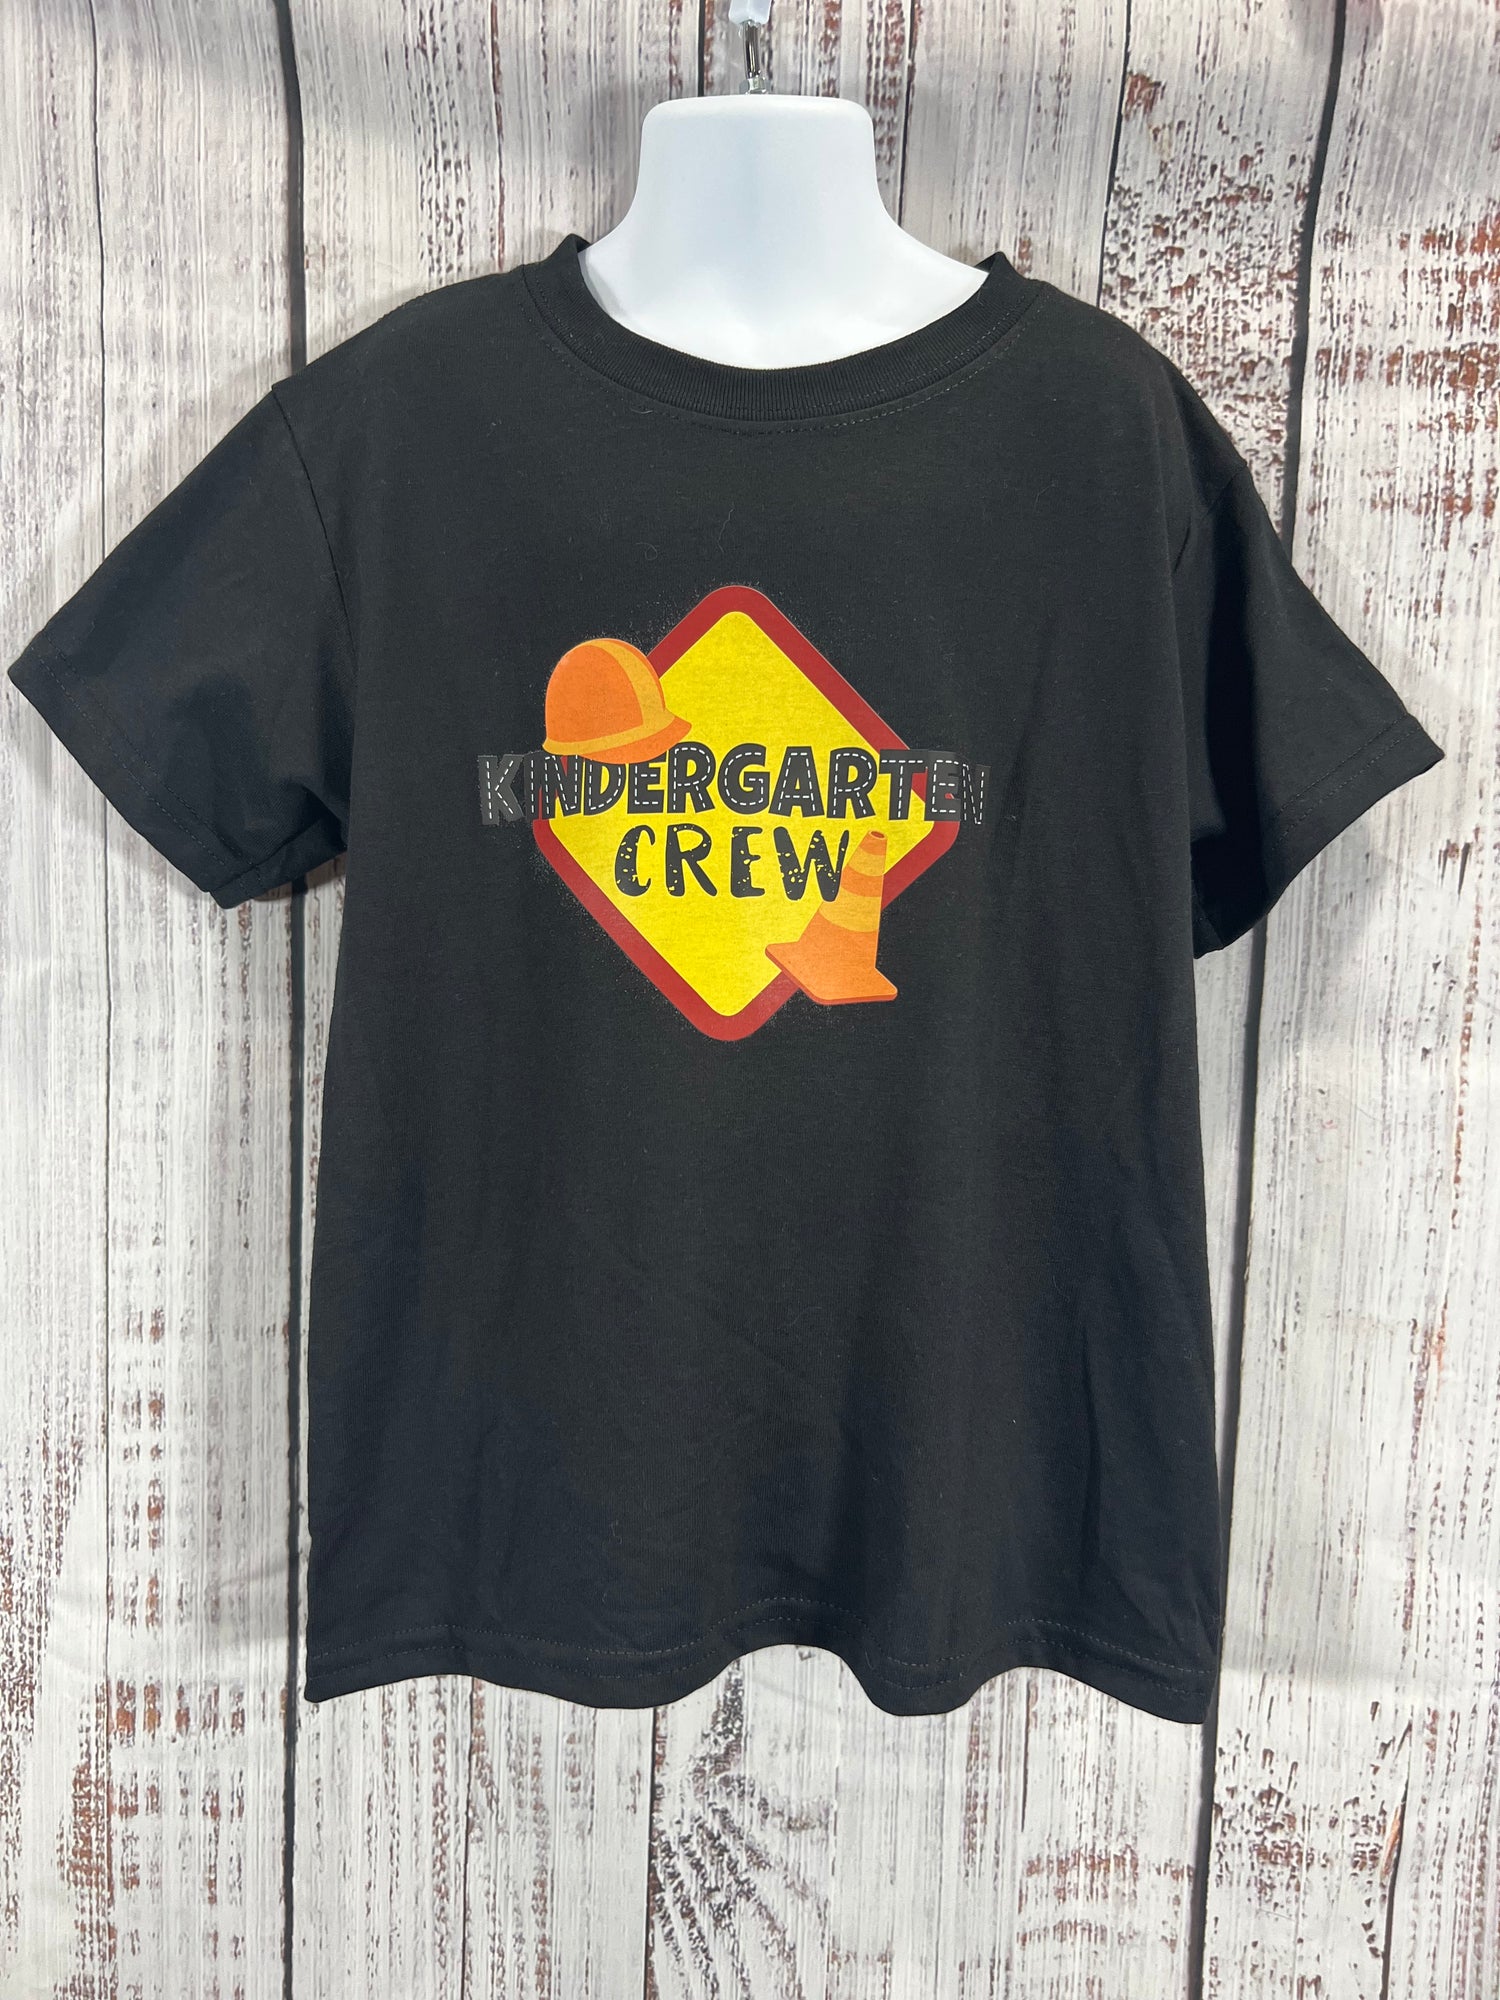 Kindergarten Crew Youth T-Shirt